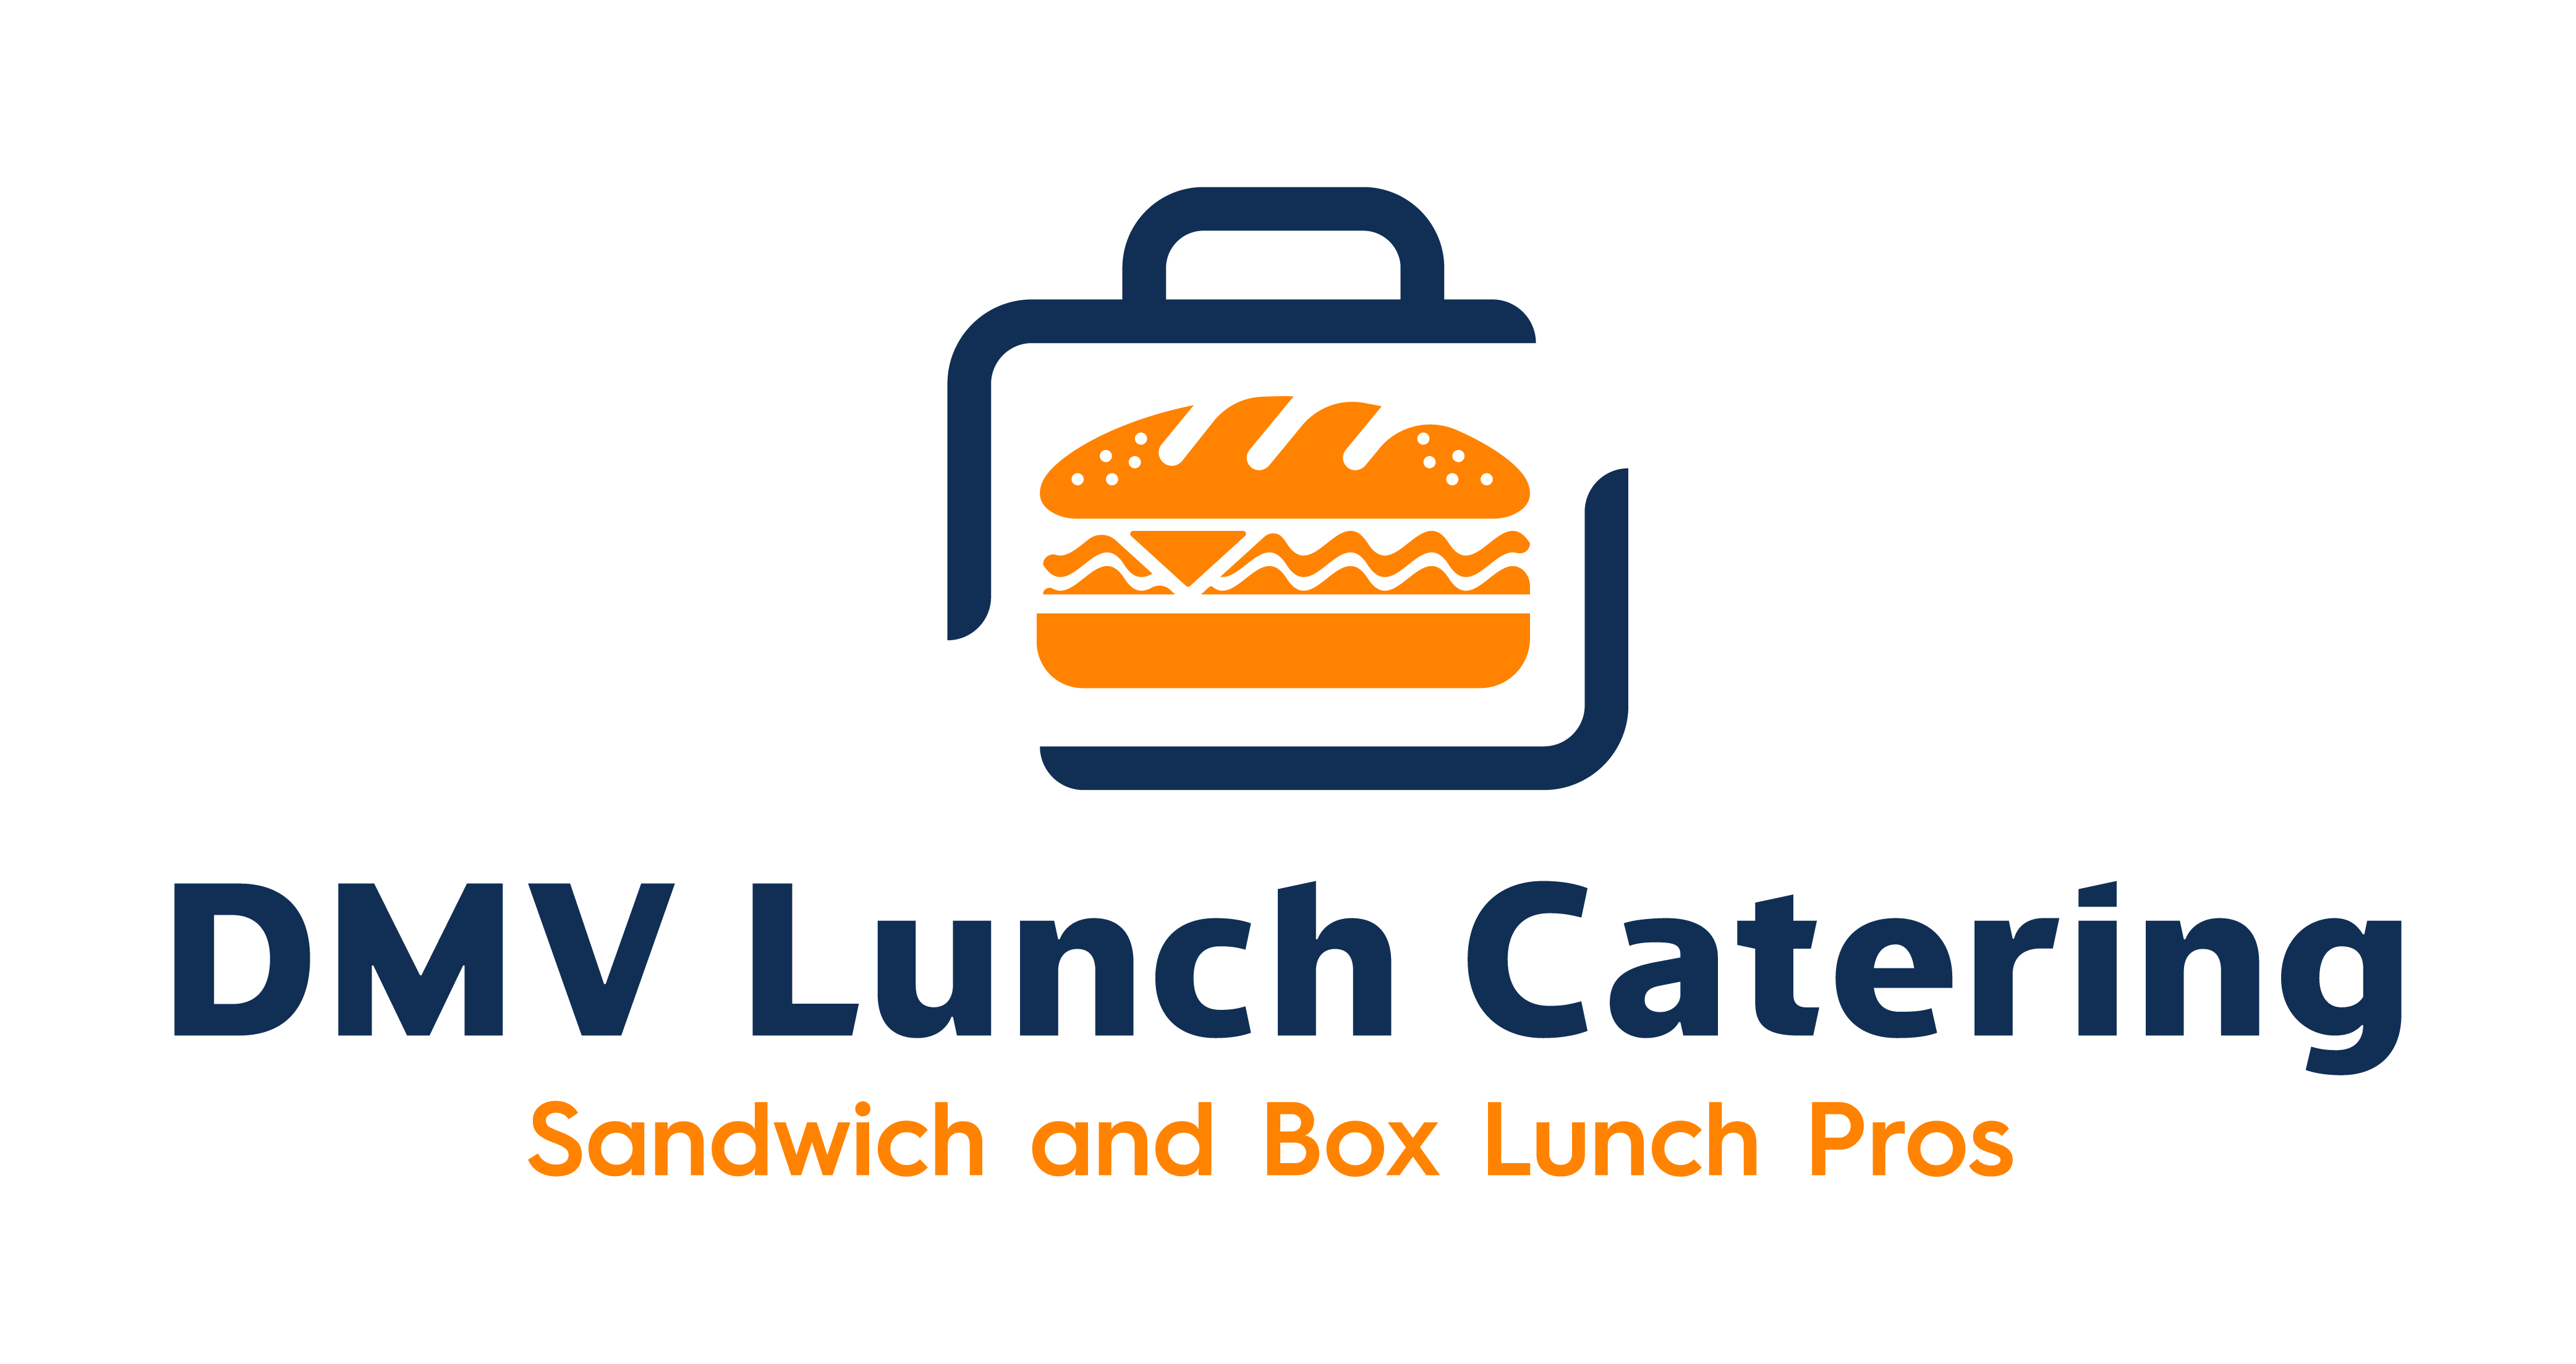 https://citationvault.com/wp-content/uploads/cpop_main_uploads/288/cropped-DMV-Lunch-Catering-01.png